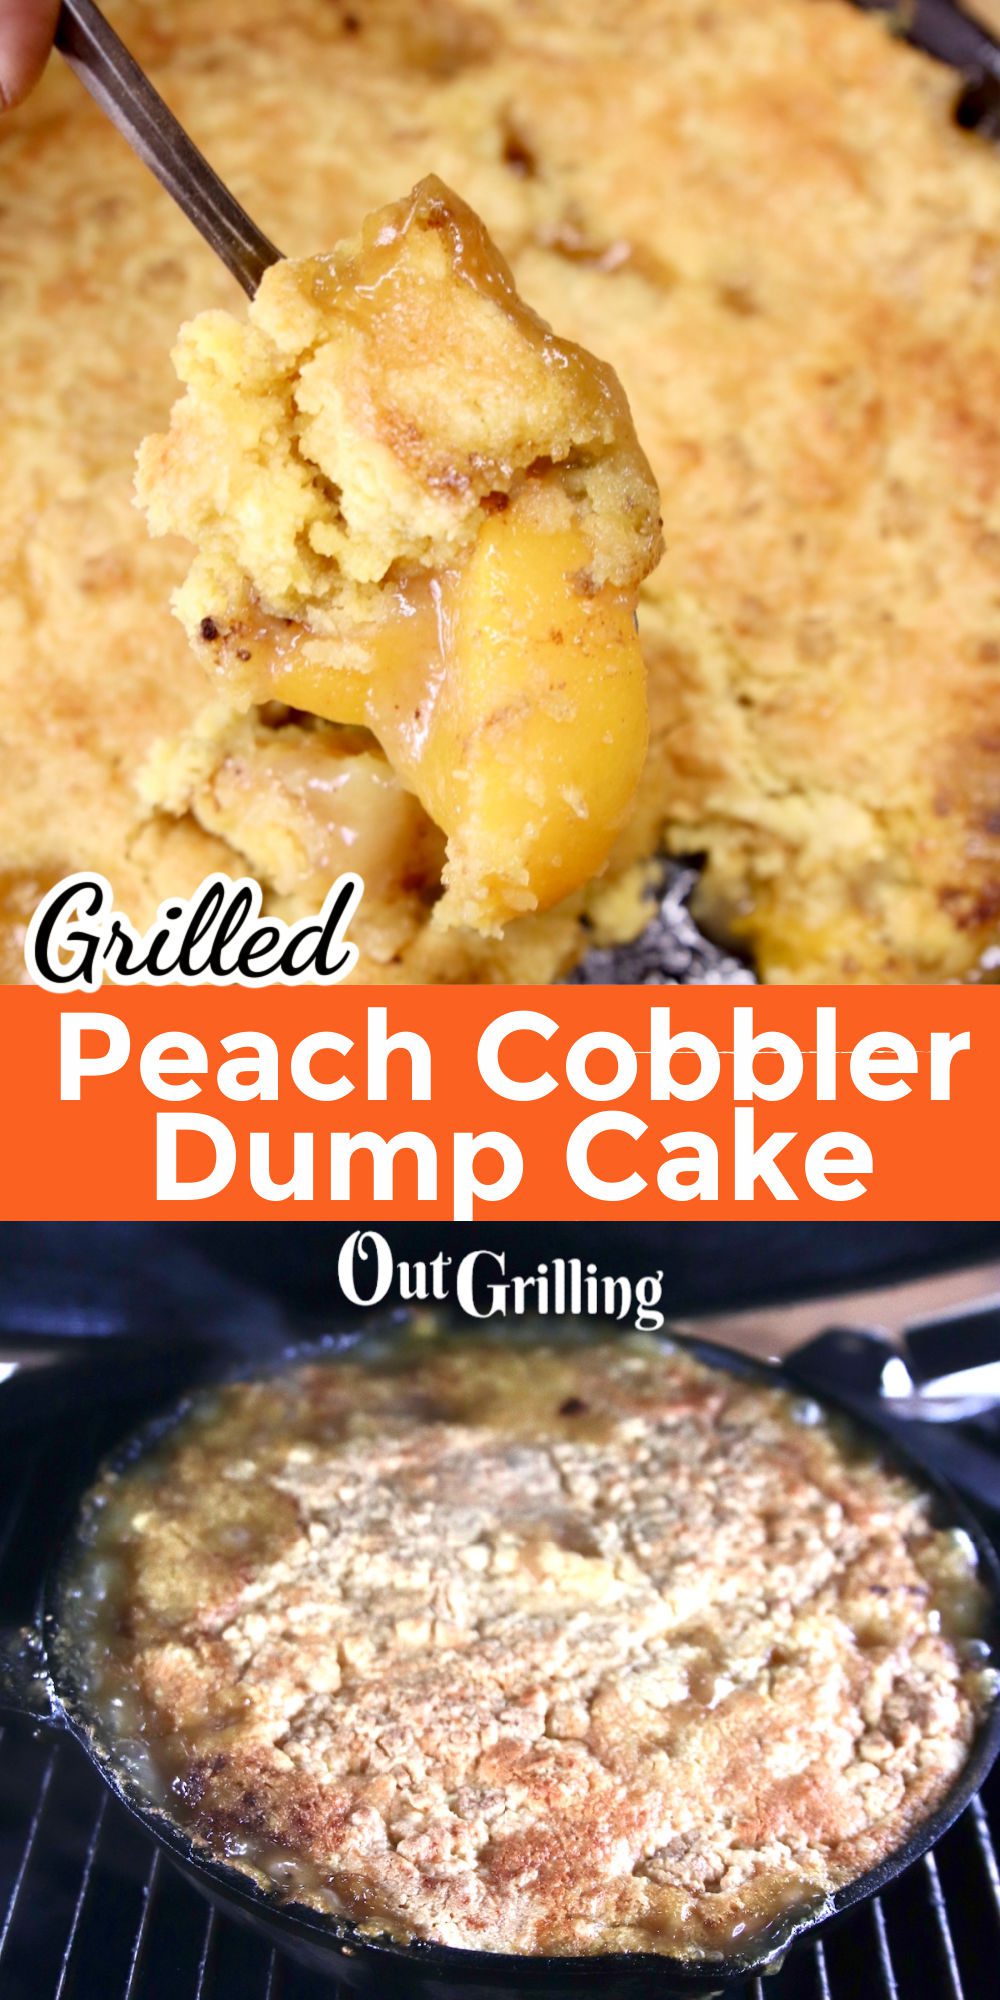 Grilled Peach Cobbler Dump Cake Recipe - Out Grilling